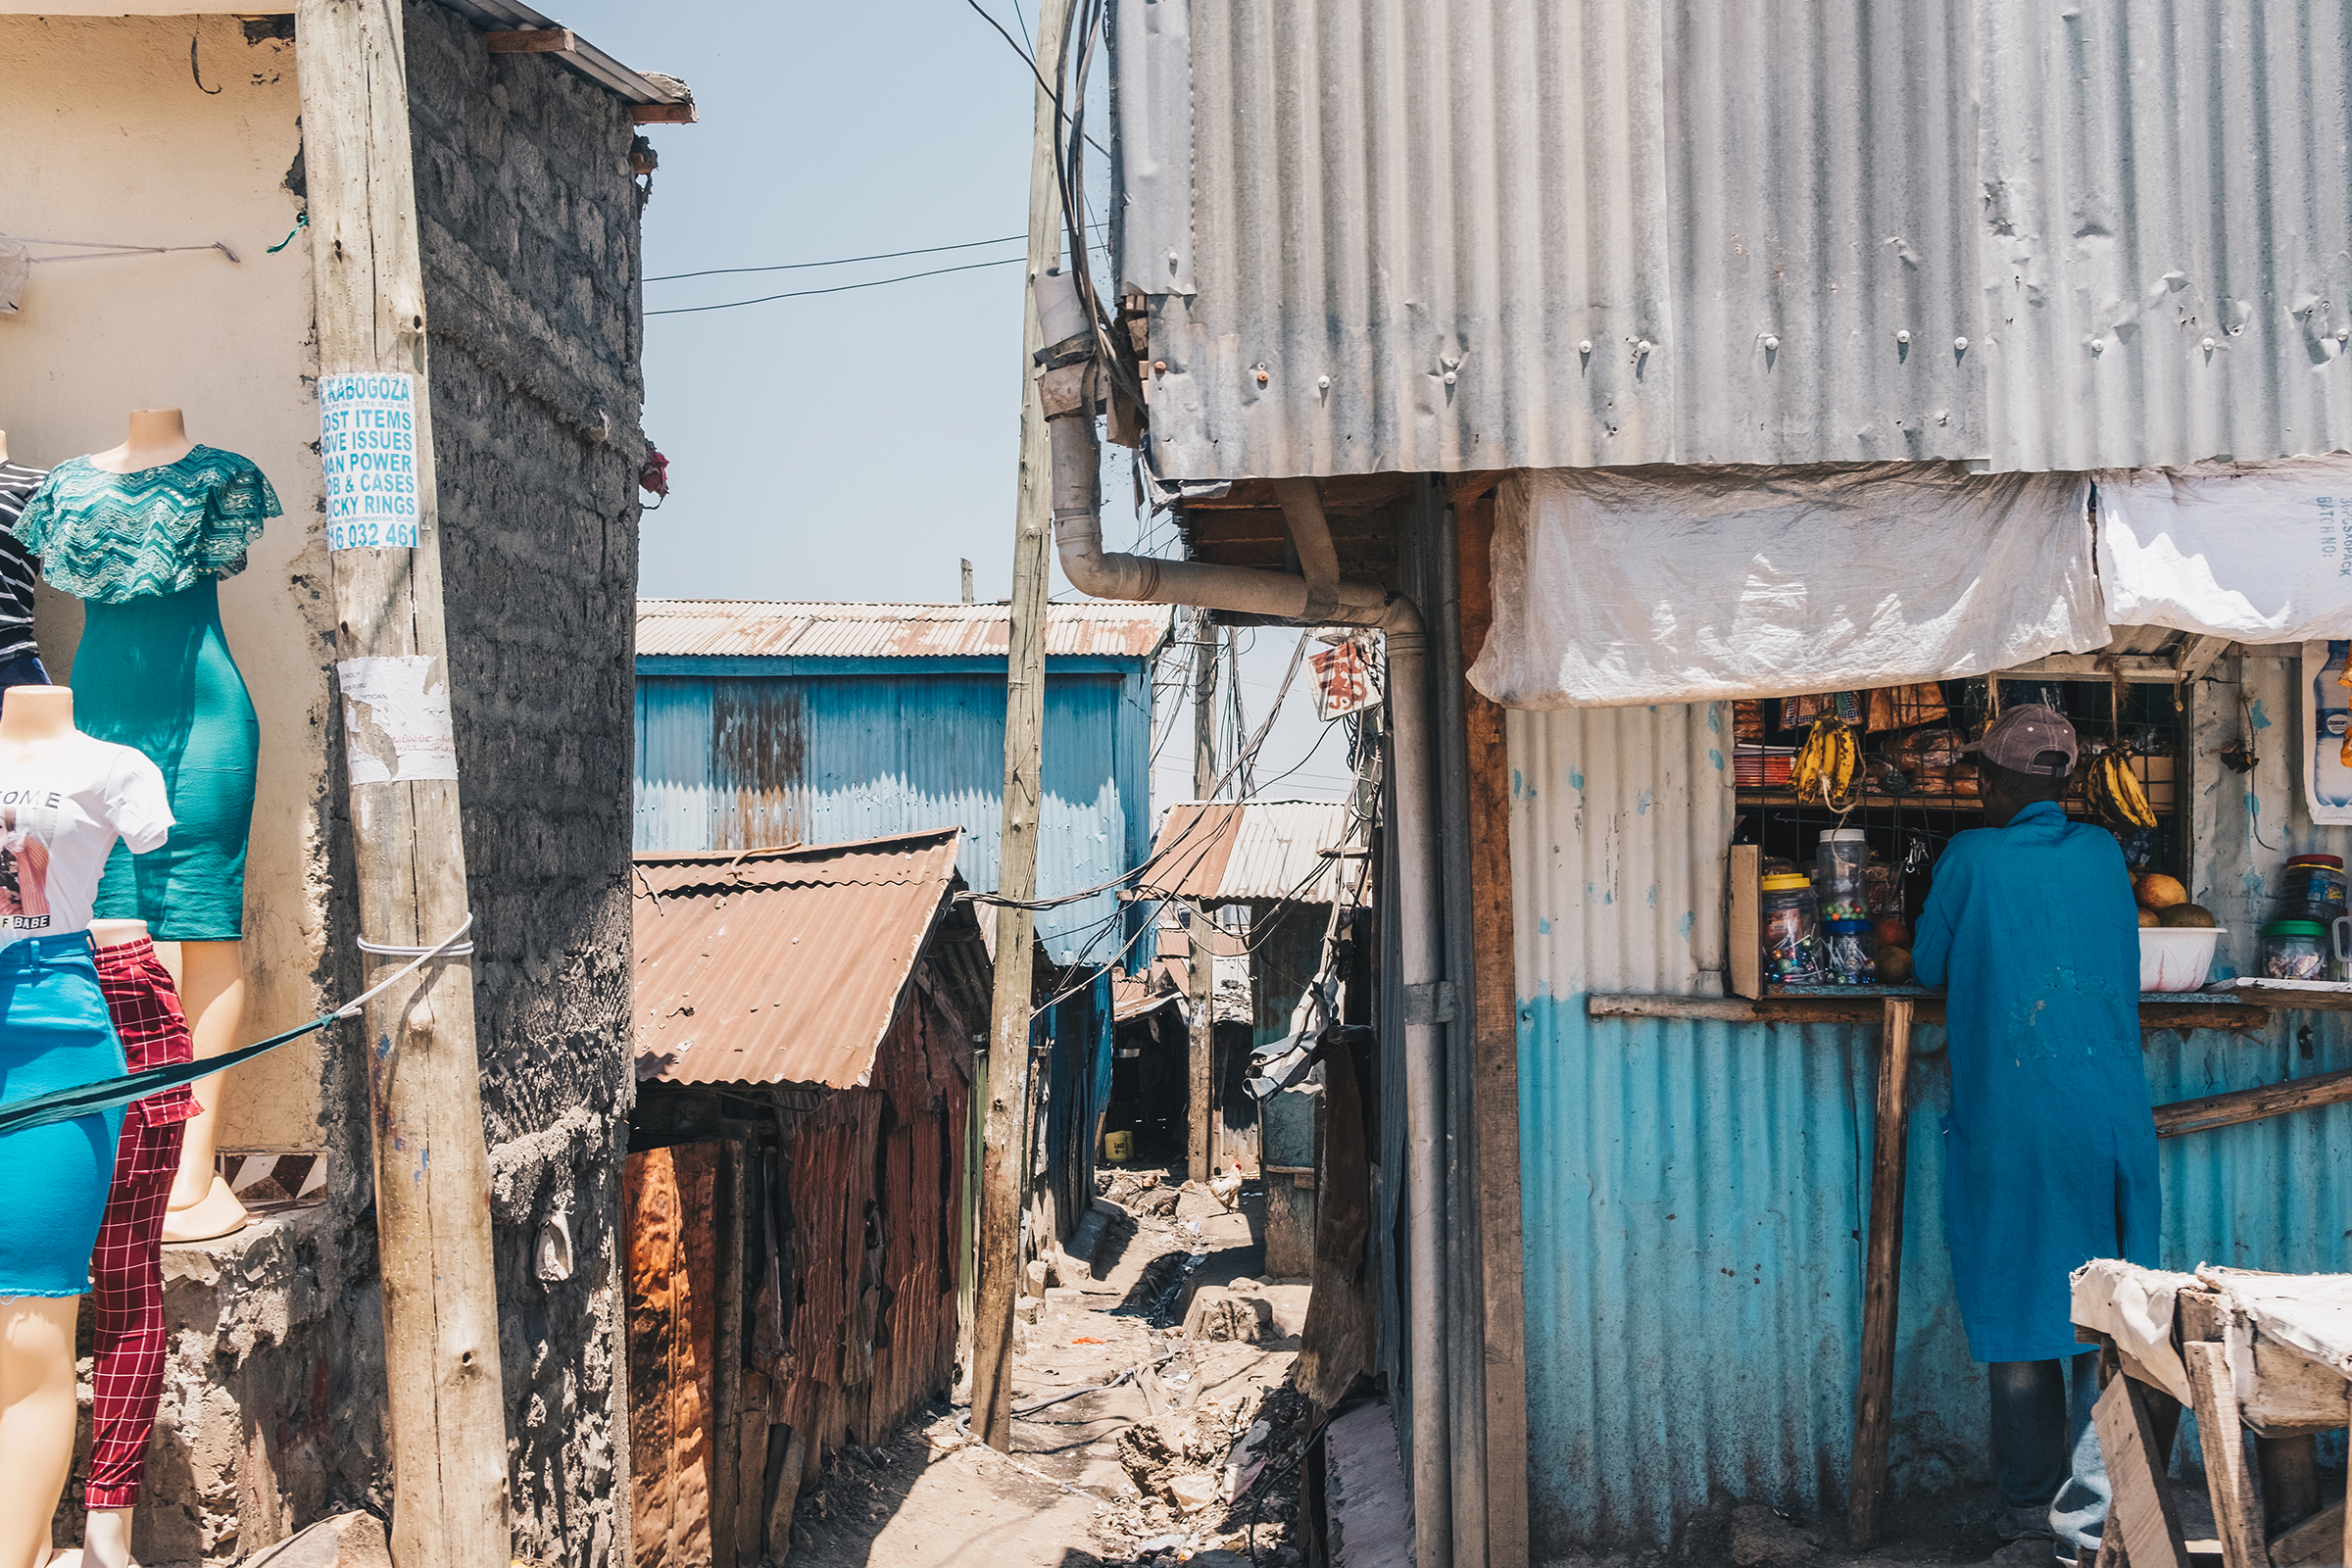 Less than two miles from Sama's office is Mukuru kwa Njenga, one of the largest informal settlements in Nairobi.